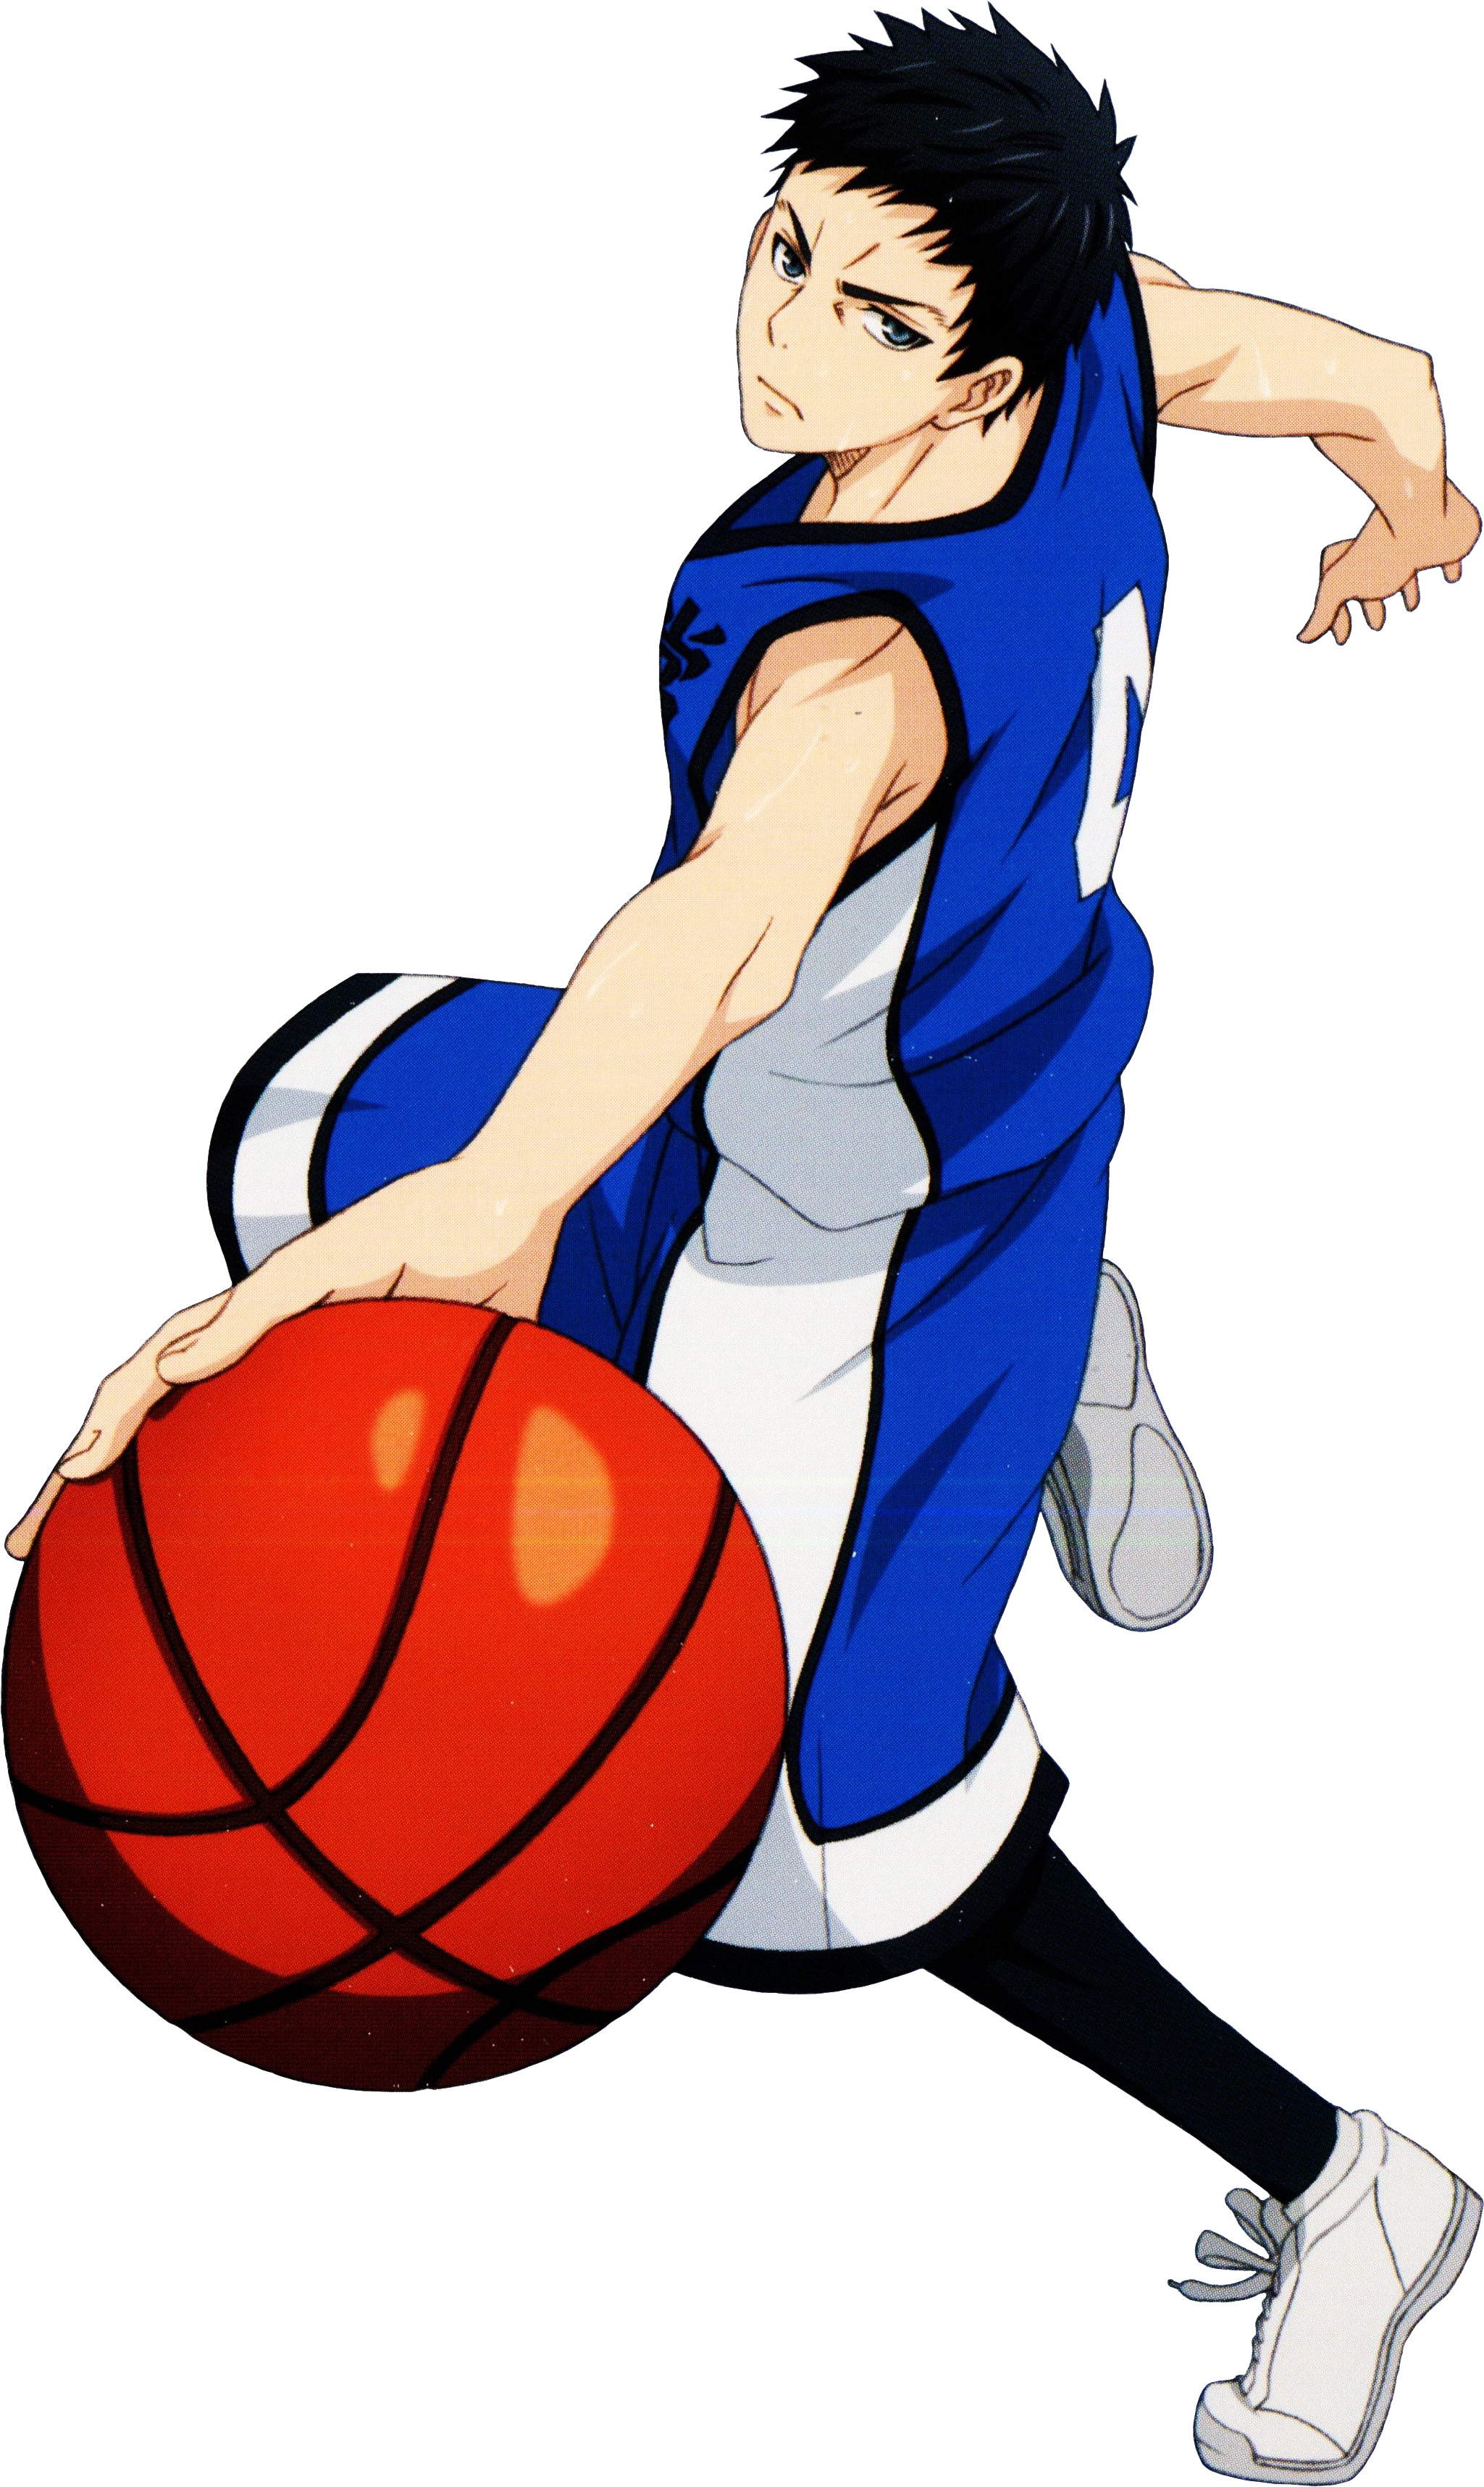 Anime Basketball player stock illustration. Illustration of color - 29315728